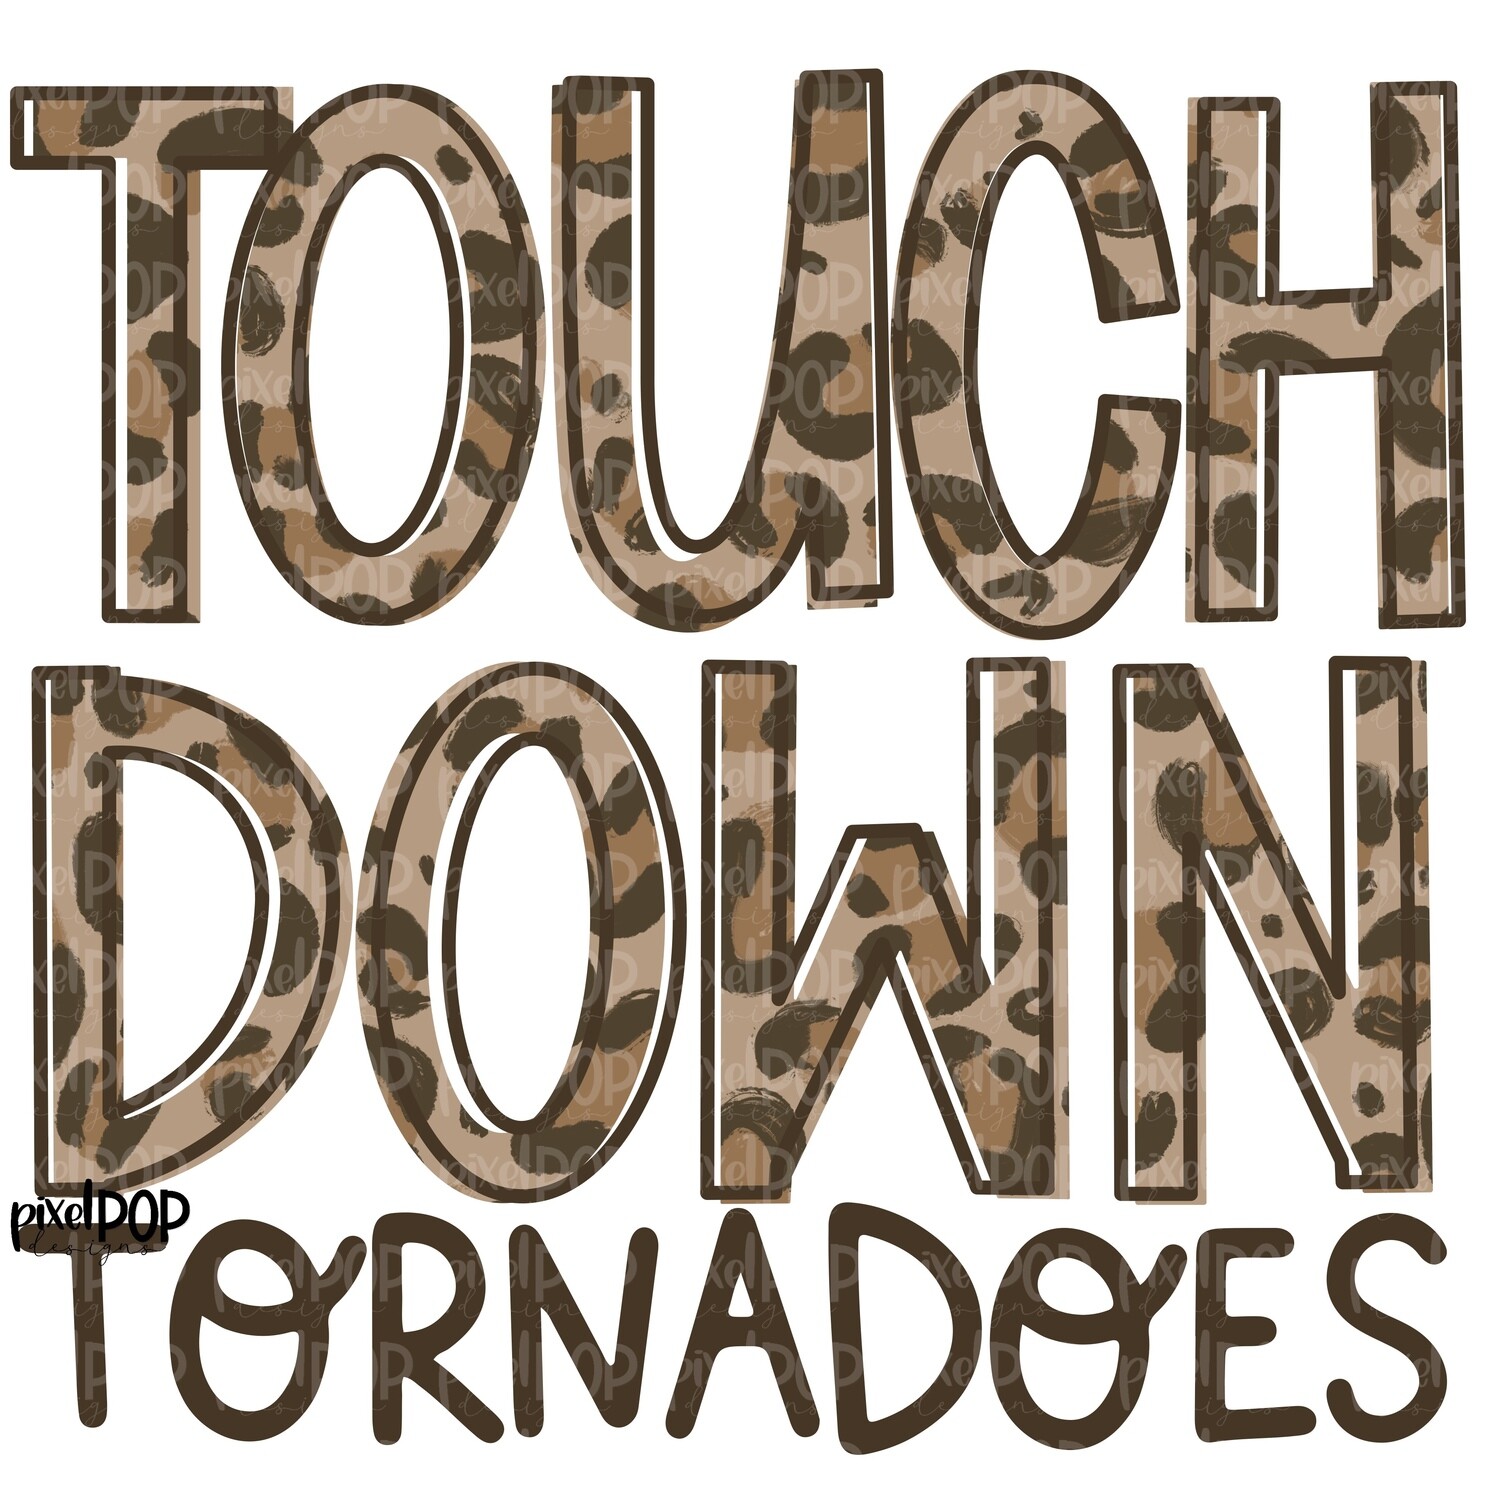 Tornadoes Touchdown Leopard Print Mascot PNG | Tornadoes Sublimation Design | Team Spirit Design | Tornadoes Clip Art | Digital Download | Printable Artwork | Sports Art